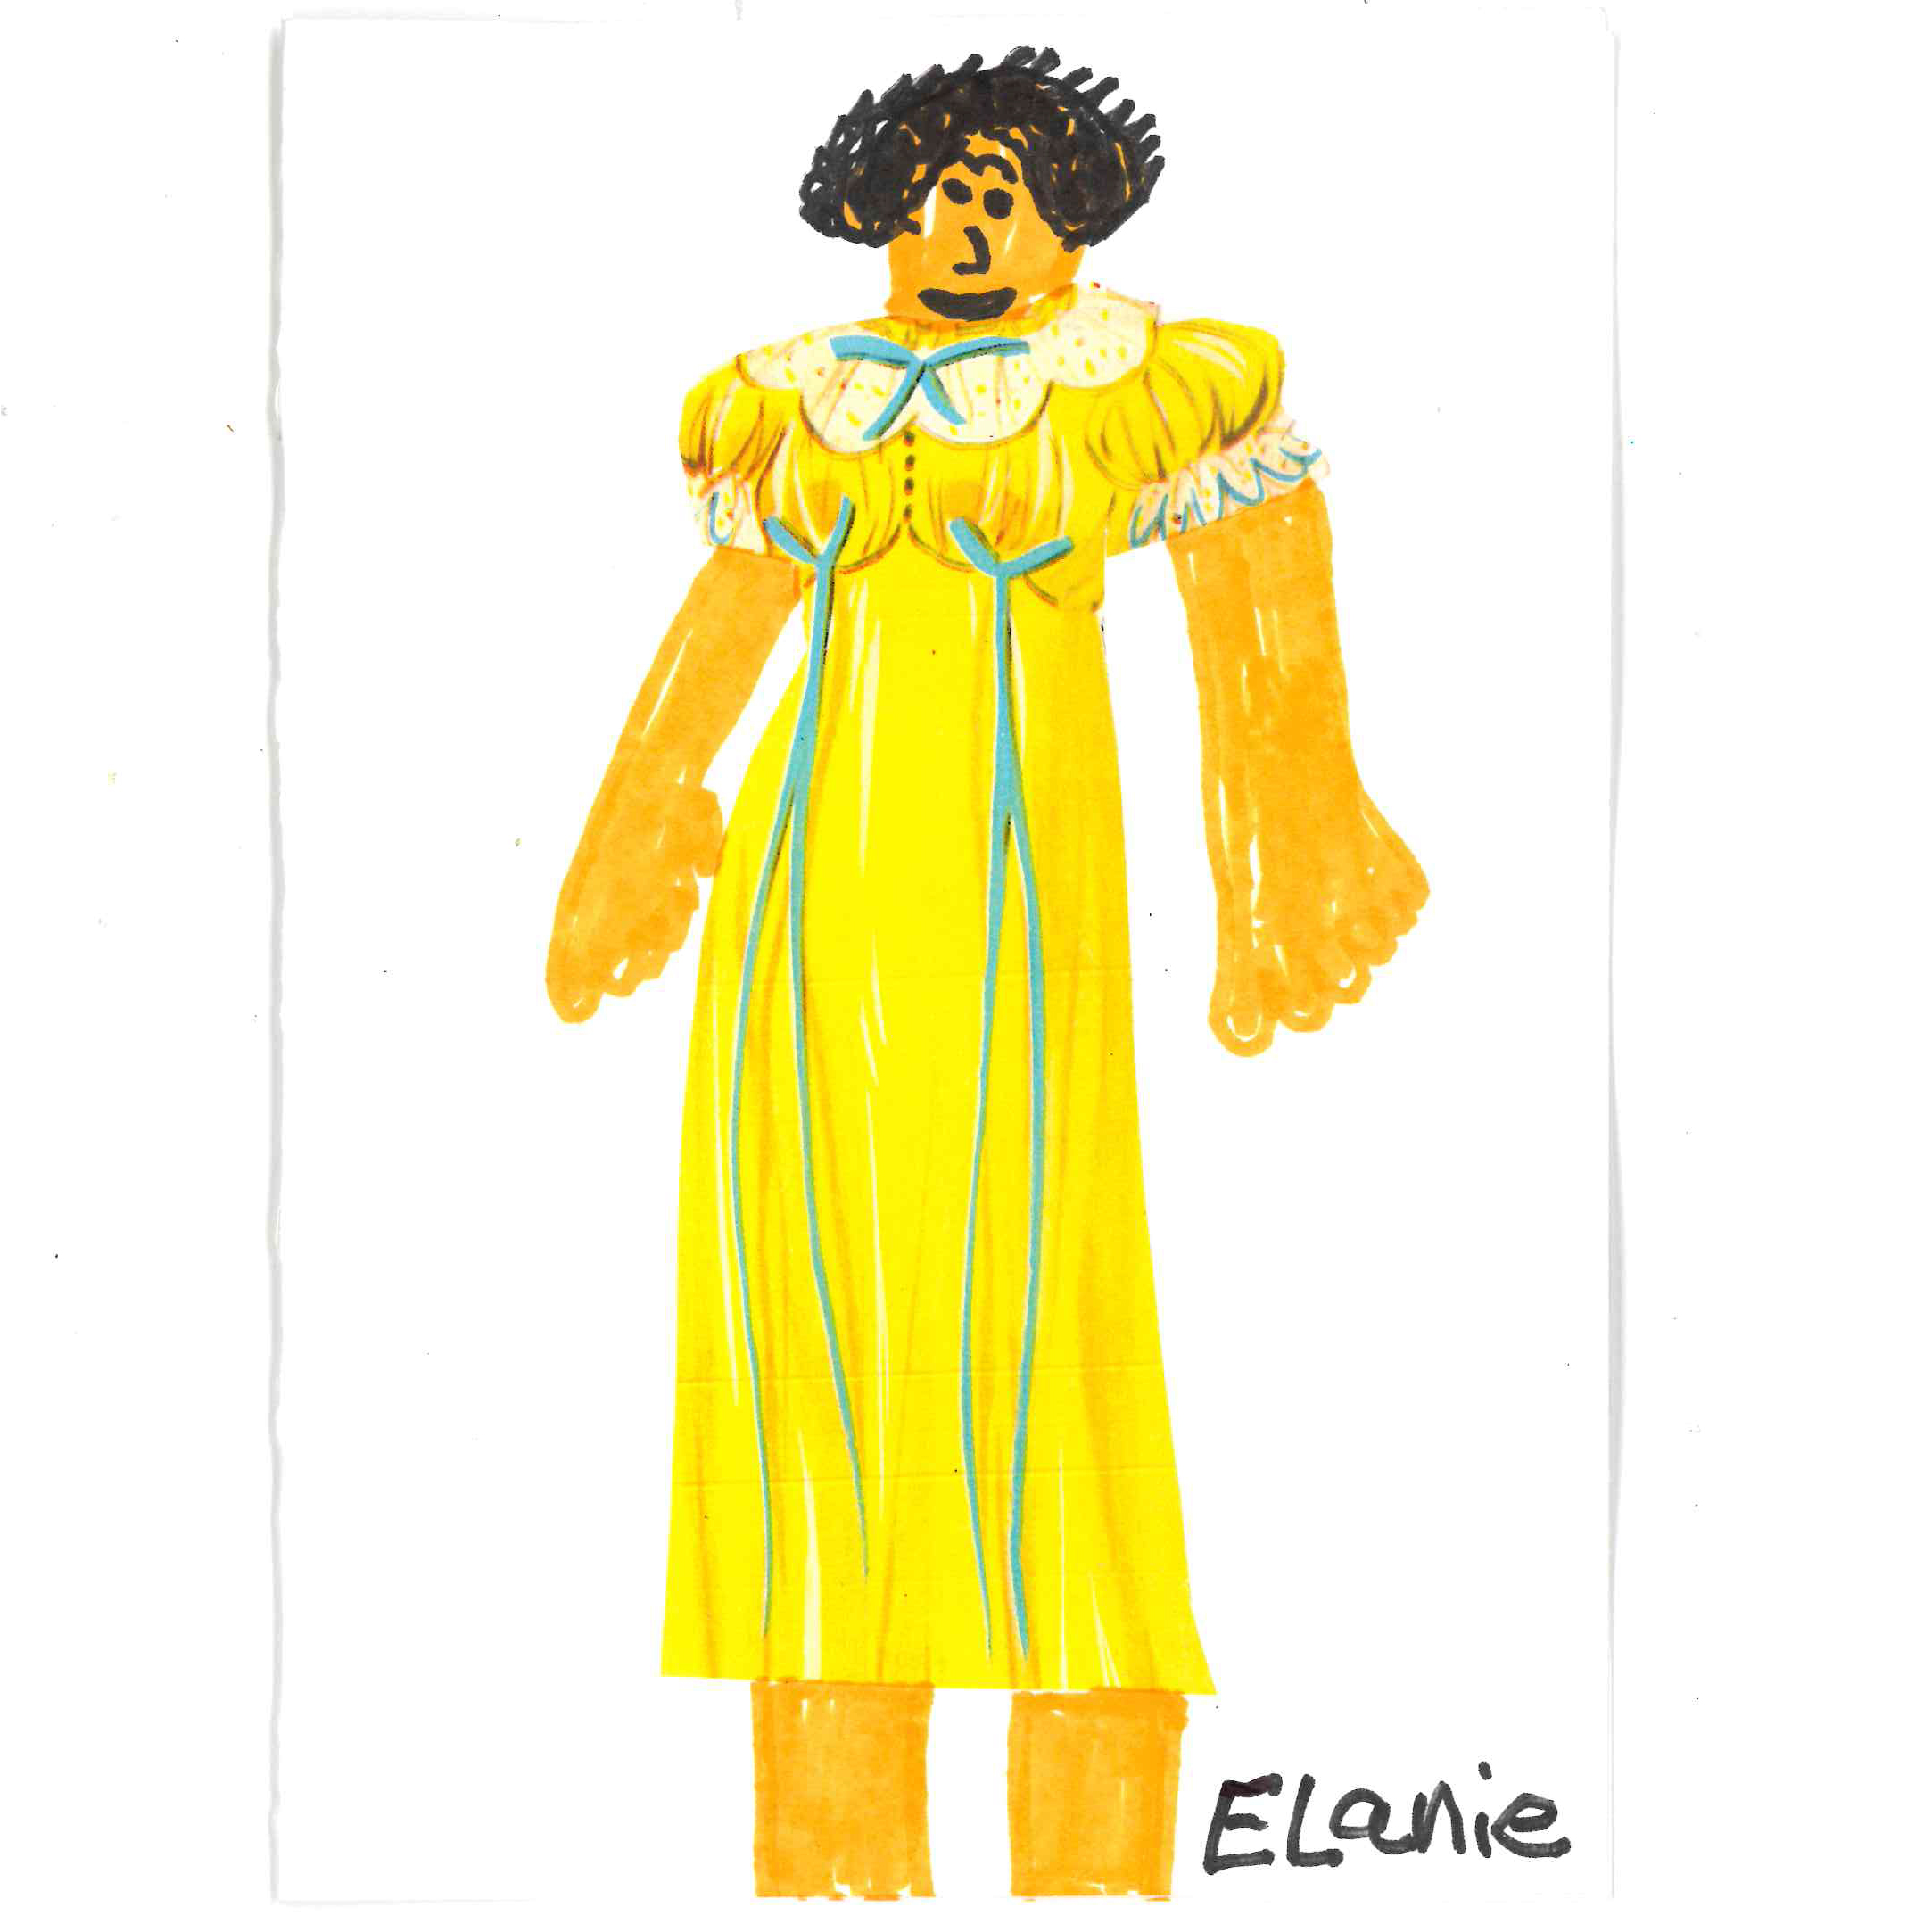 Elaine card by Debra Belsky